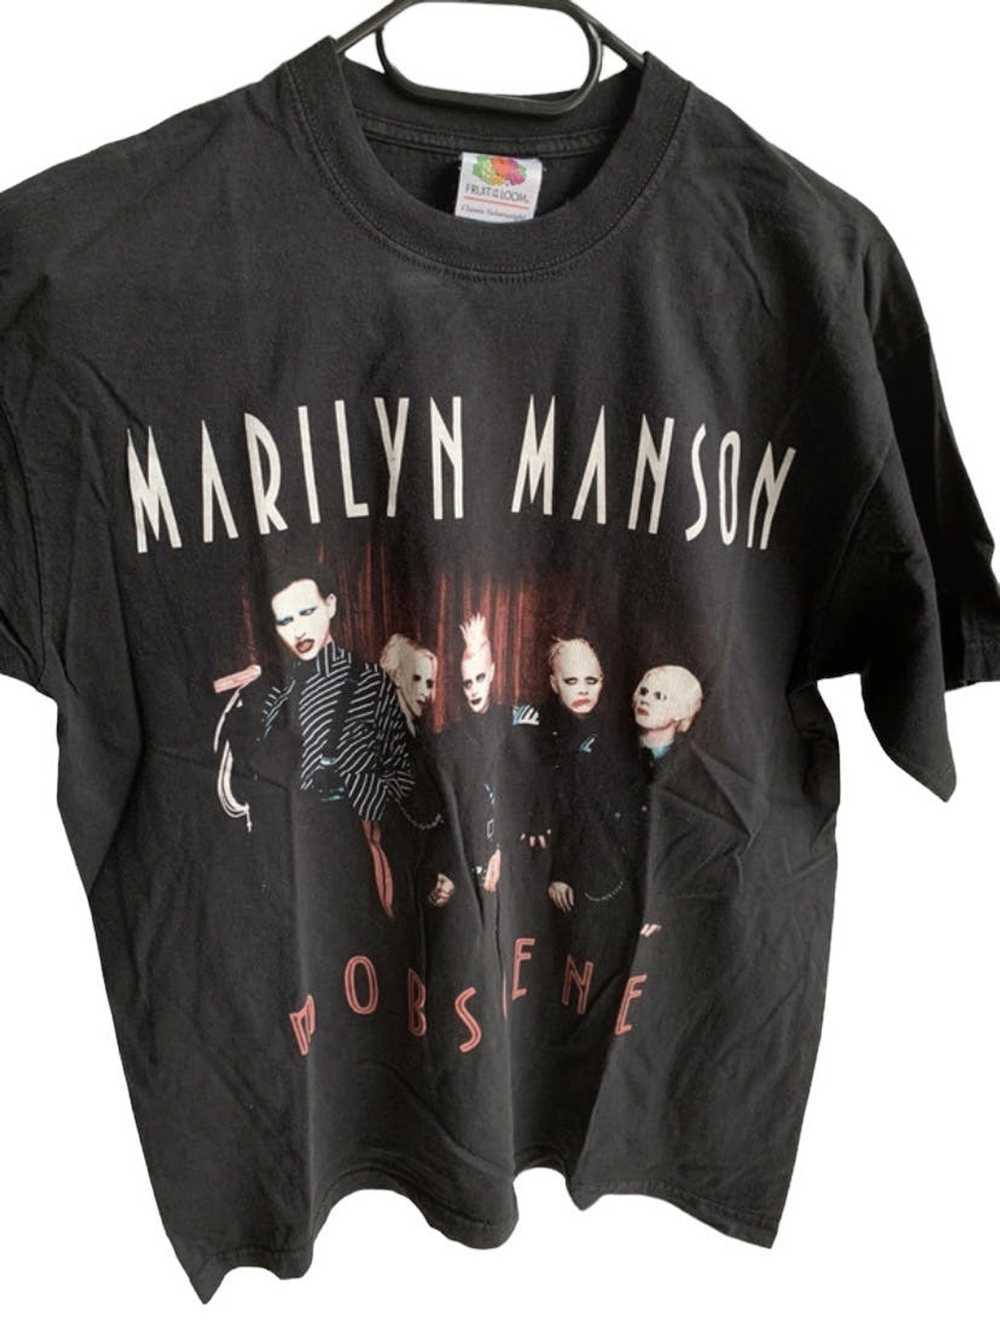 Marilyn Manson × Vintage Marilyn Manson t shirt vinta… - Gem